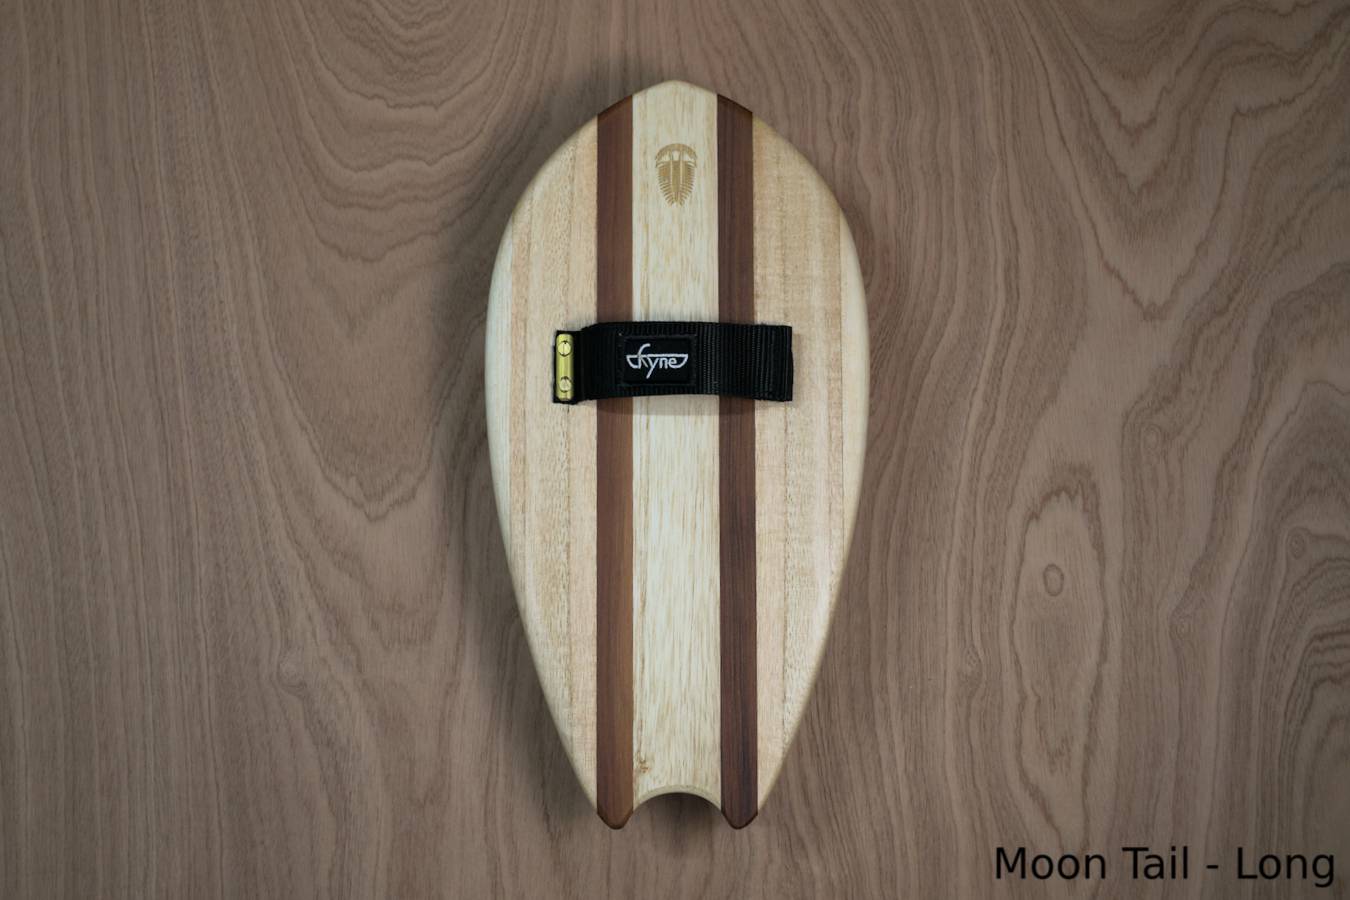 Moon Tail (long) wooden handplane handmade by Fyne Boat Kits